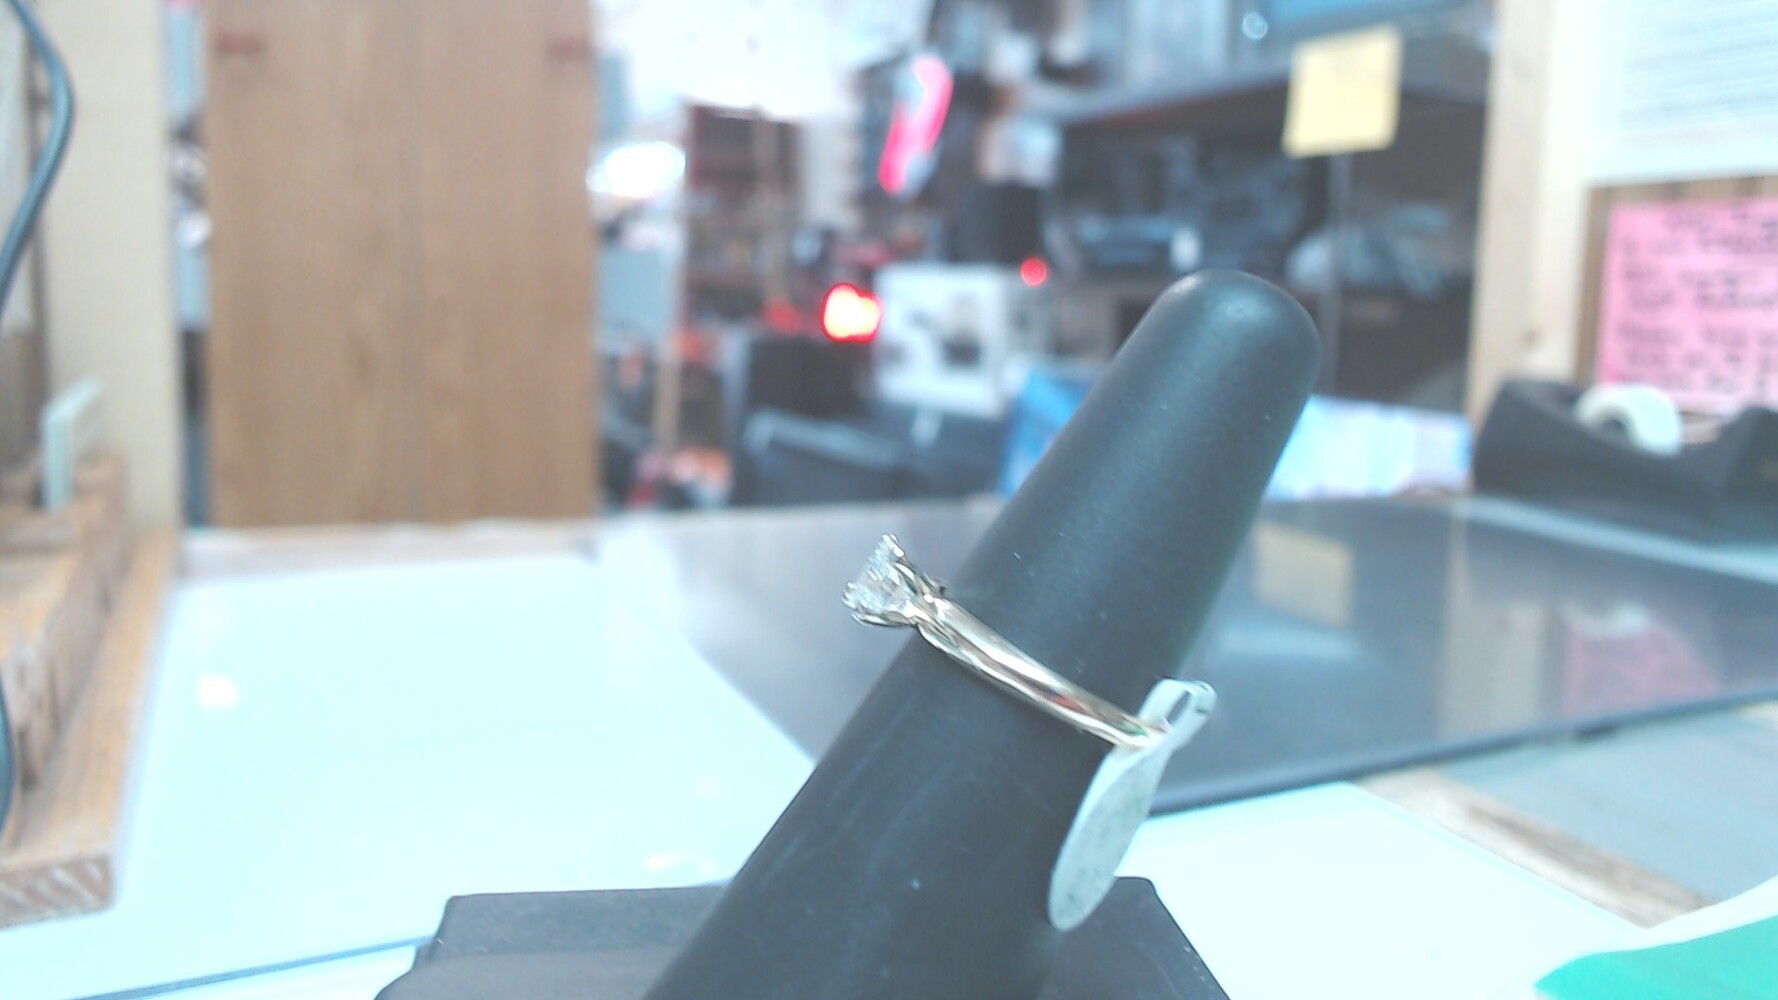 14k YG Princess Cut Diamond Ring, Diamond weight .47 , Size 5 1/2